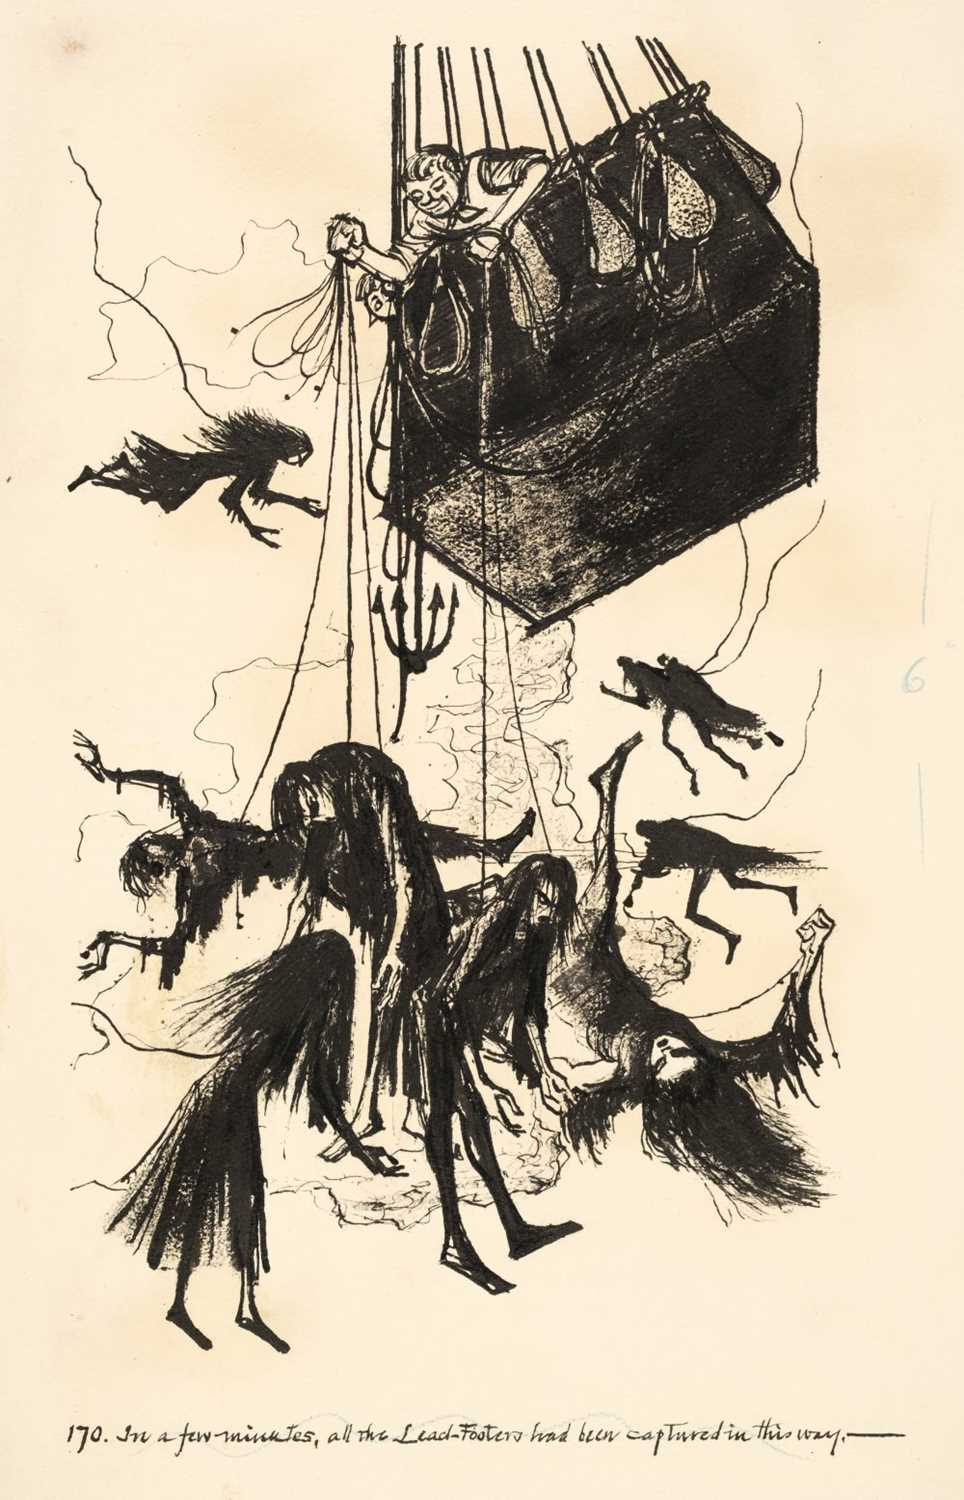 Lot 498 - Gough (Philip, illustrator). The Balloon People, [1971]